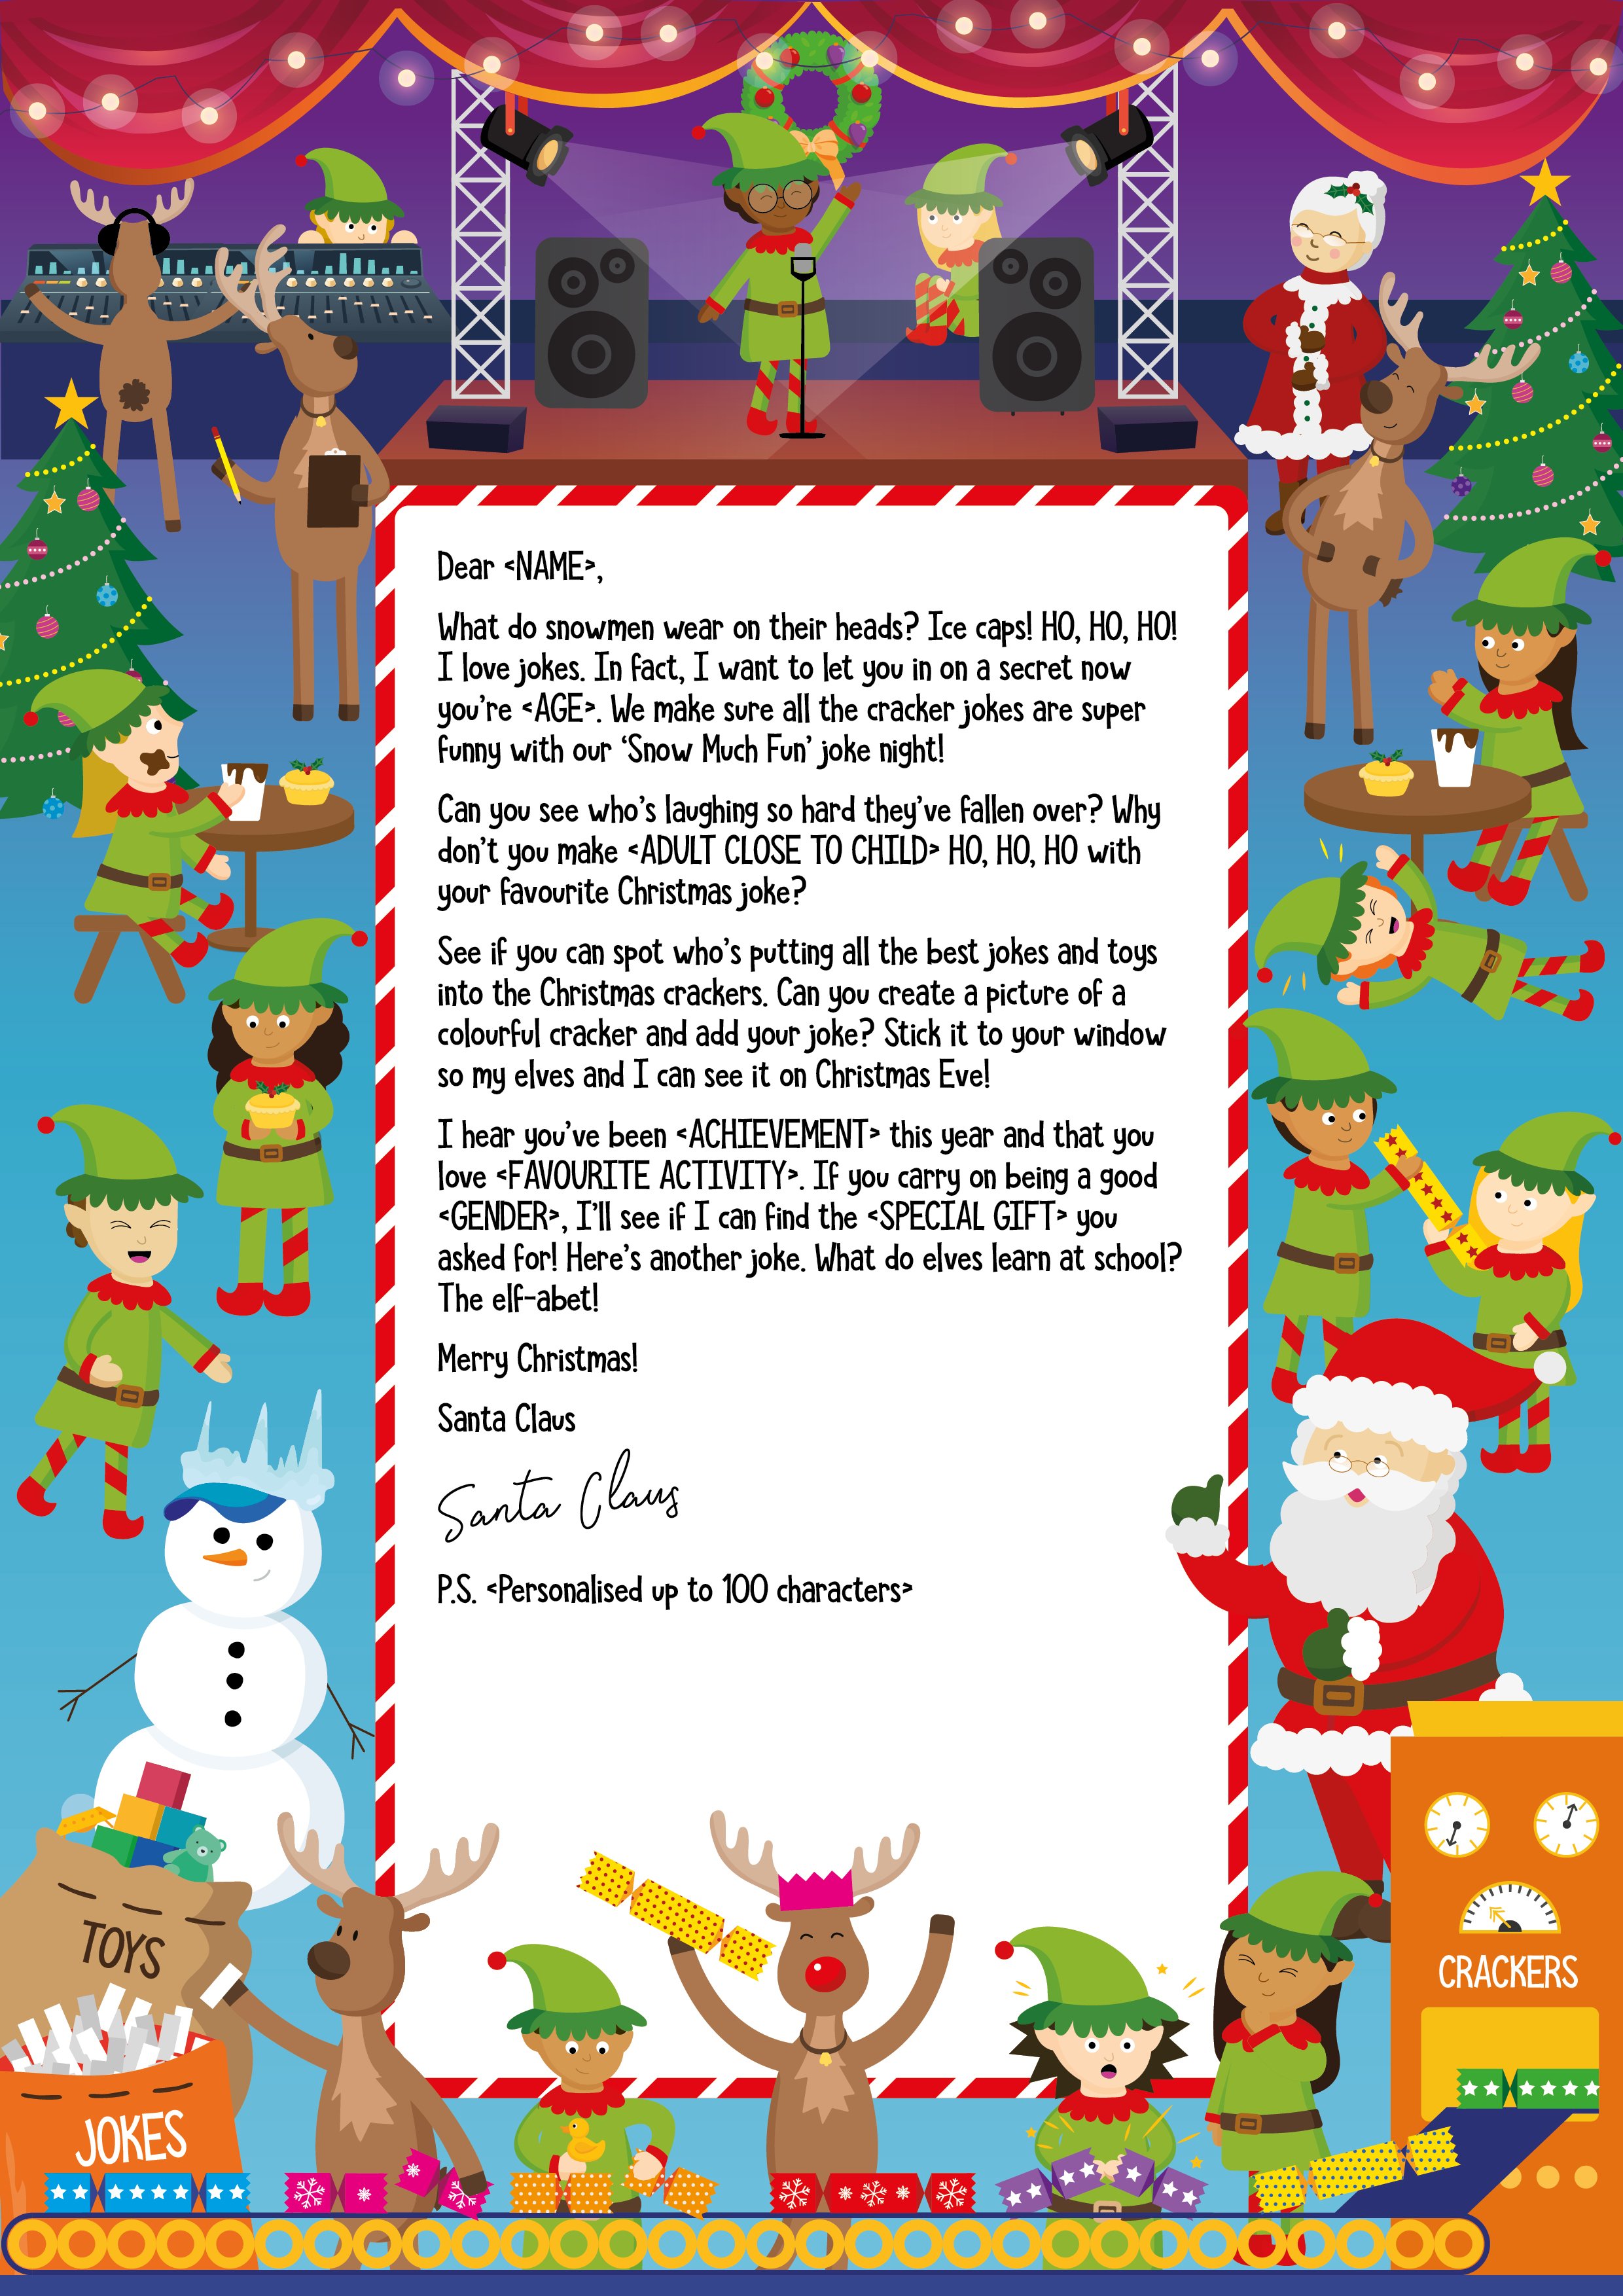 34116_art_NSPCC_Christmas_Letter_2021_Christmas_Cracker_210x297mm_ENG.jpg